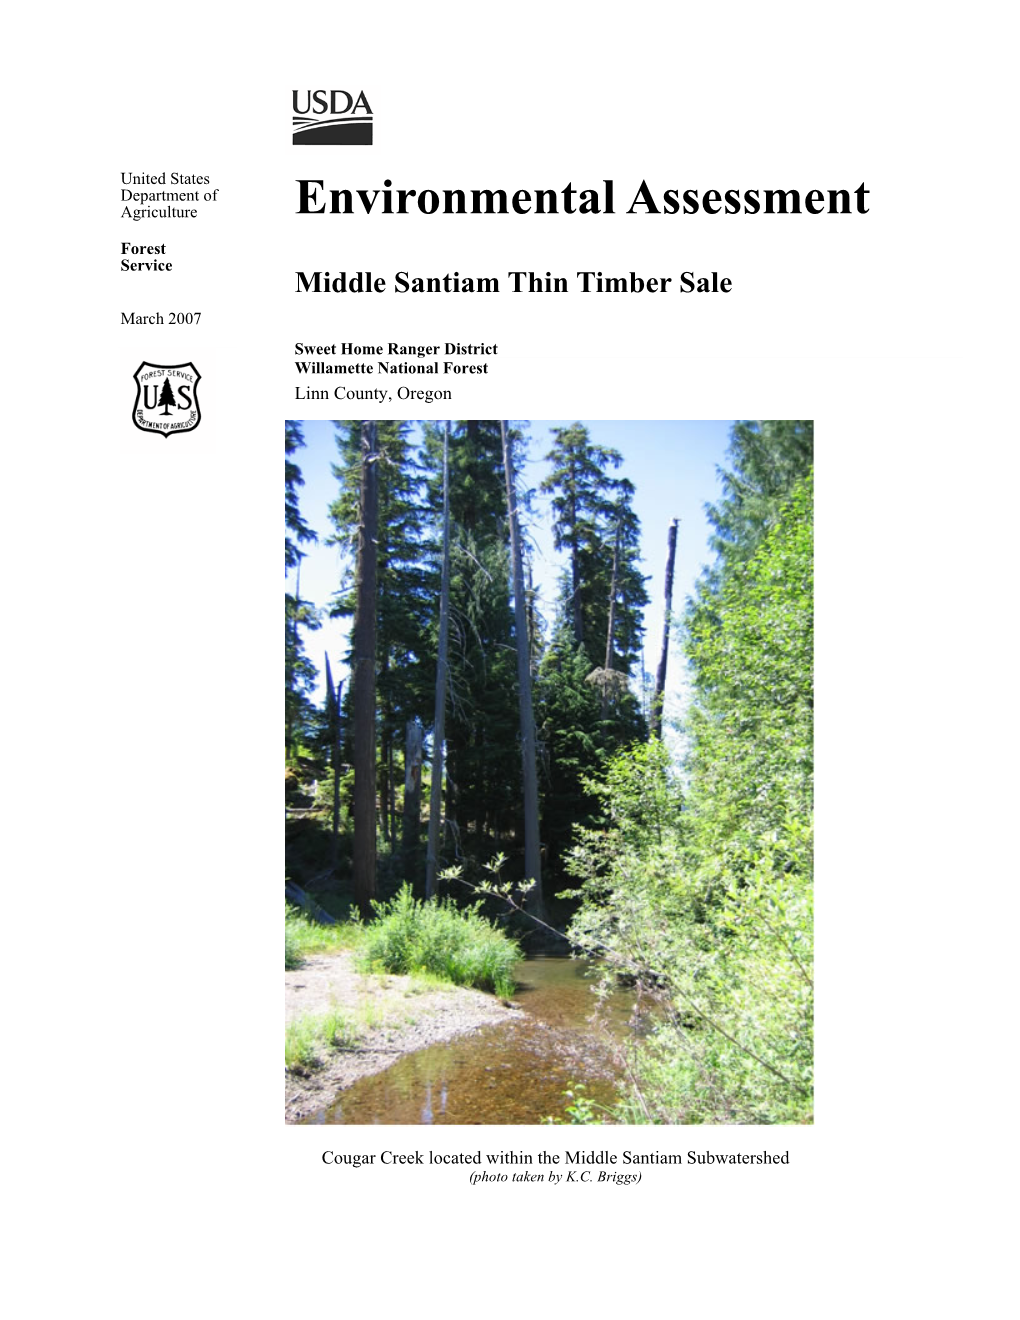 Middle Santiam Thin Environmental Assessment